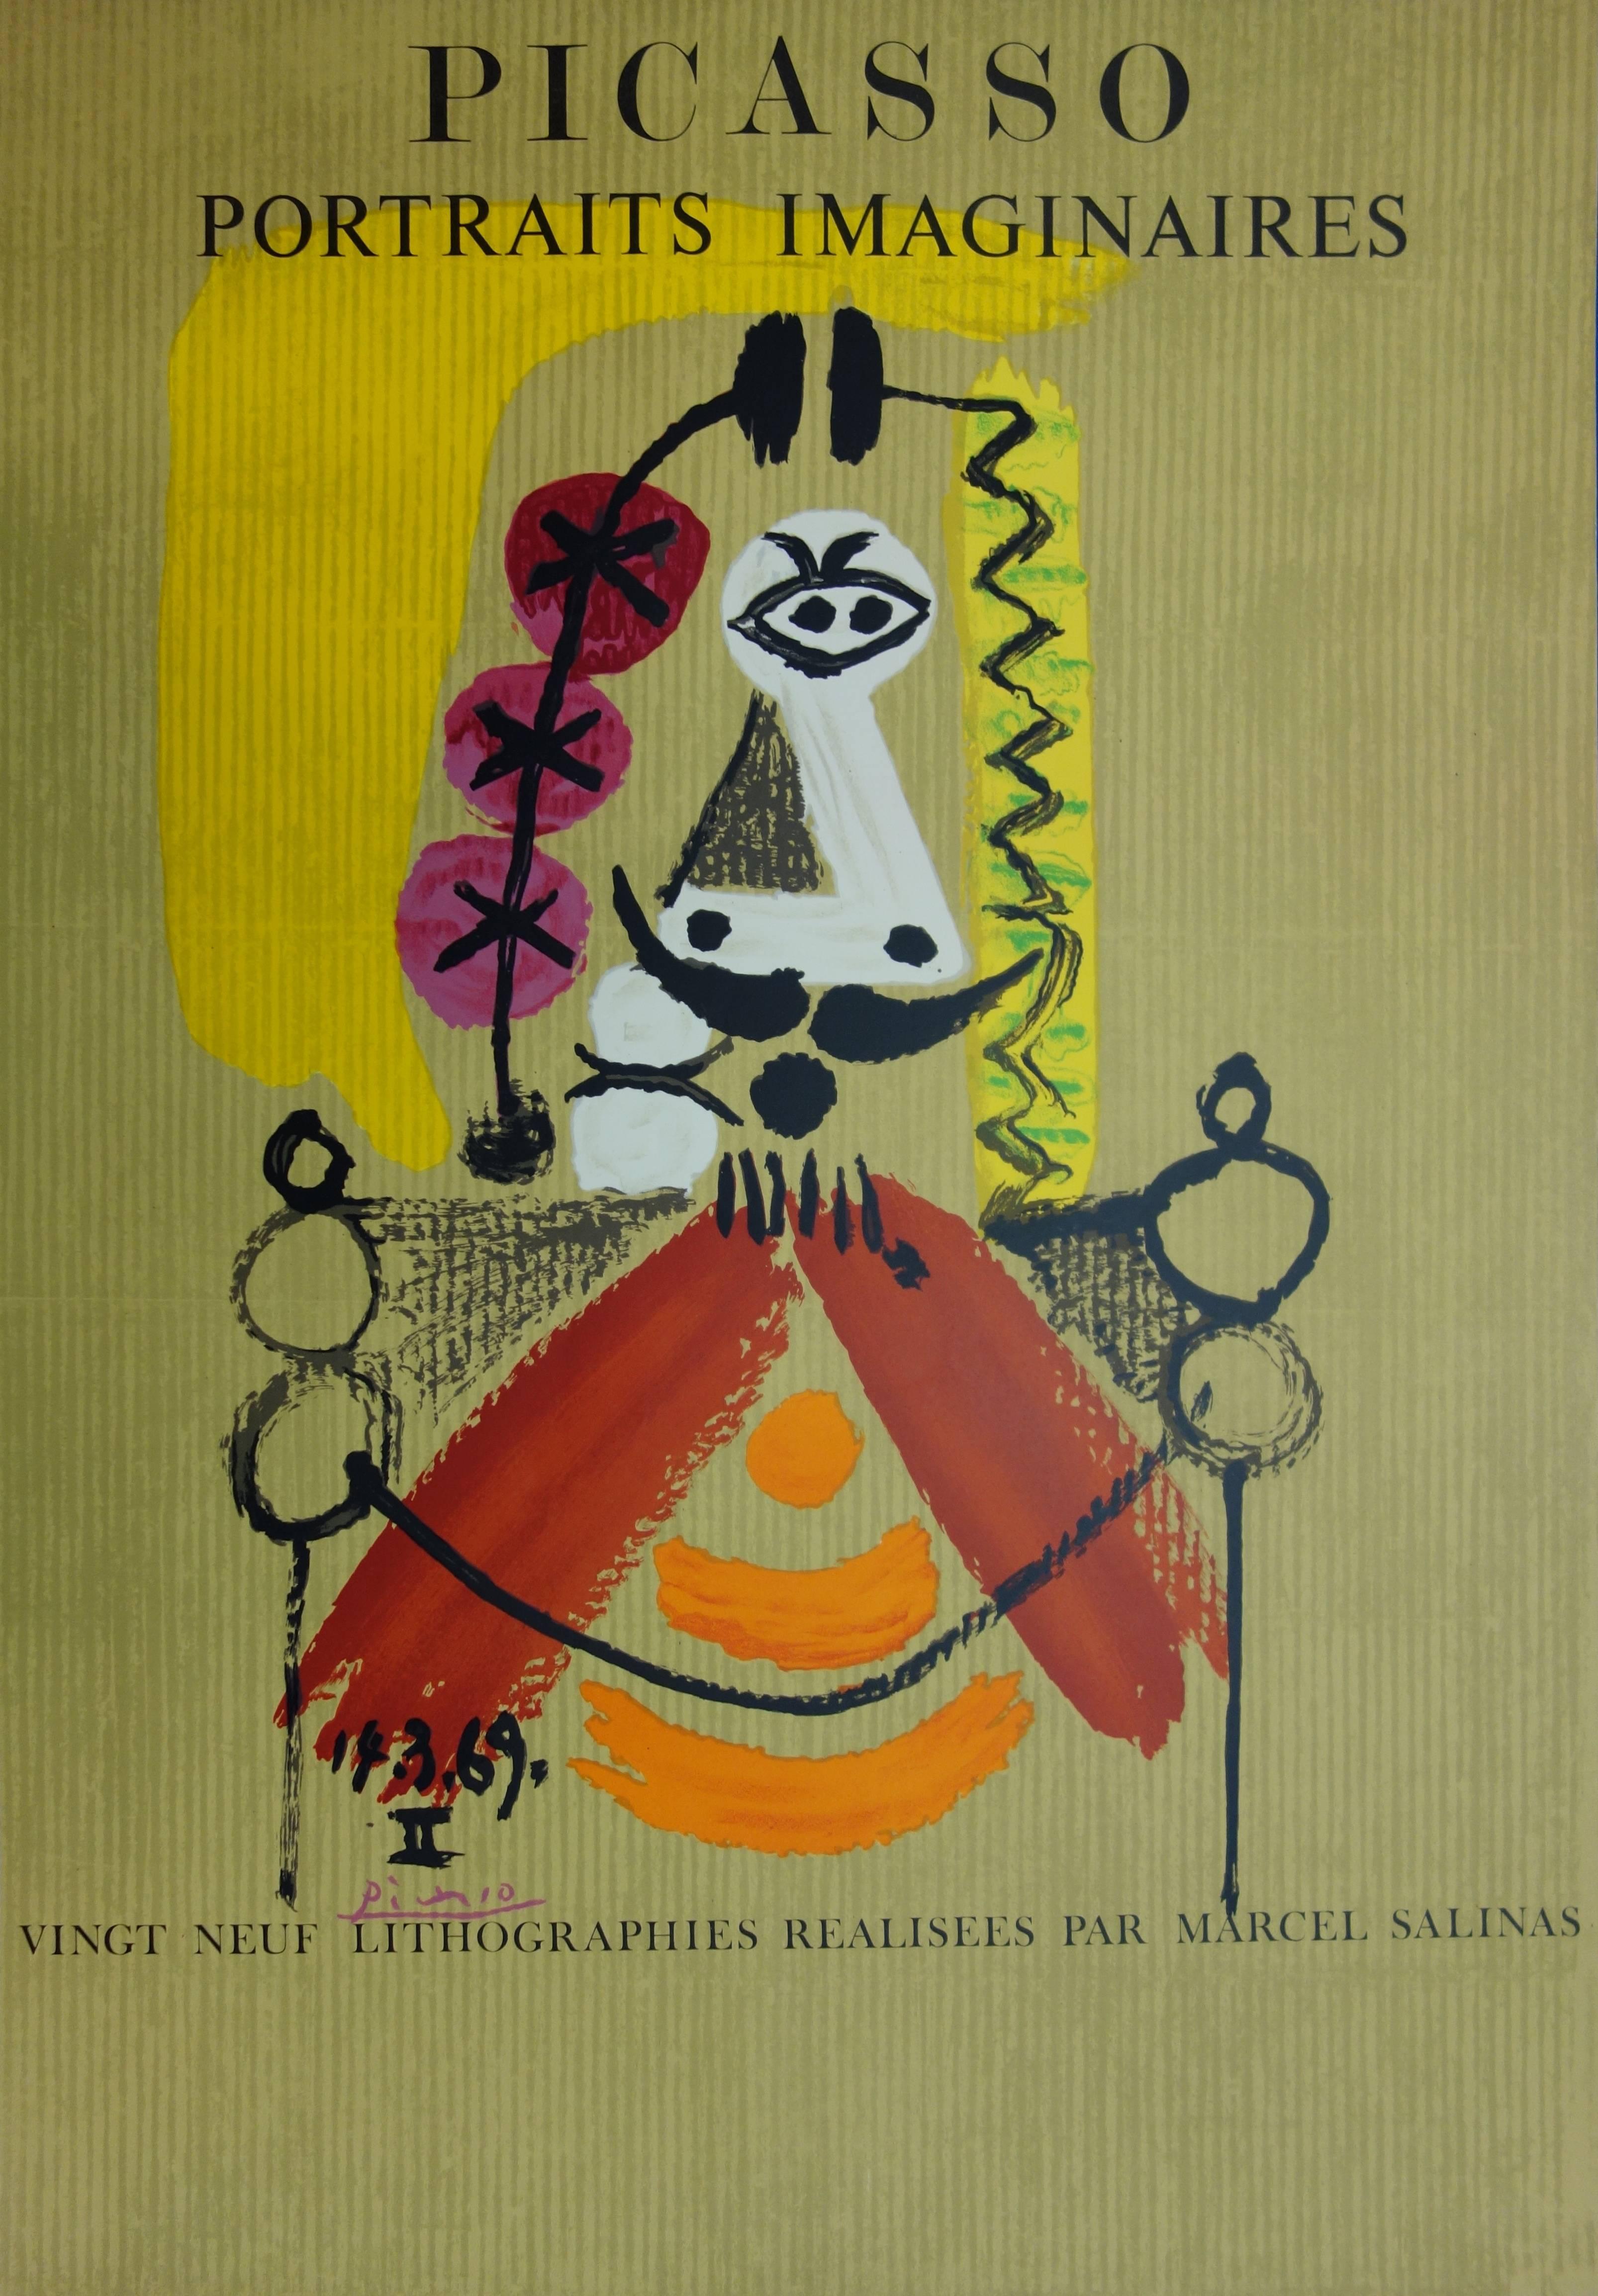 (after) Pablo Picasso Portrait Print - Imaginary Portraits : Man with a Mustache - Lithograph - 1971